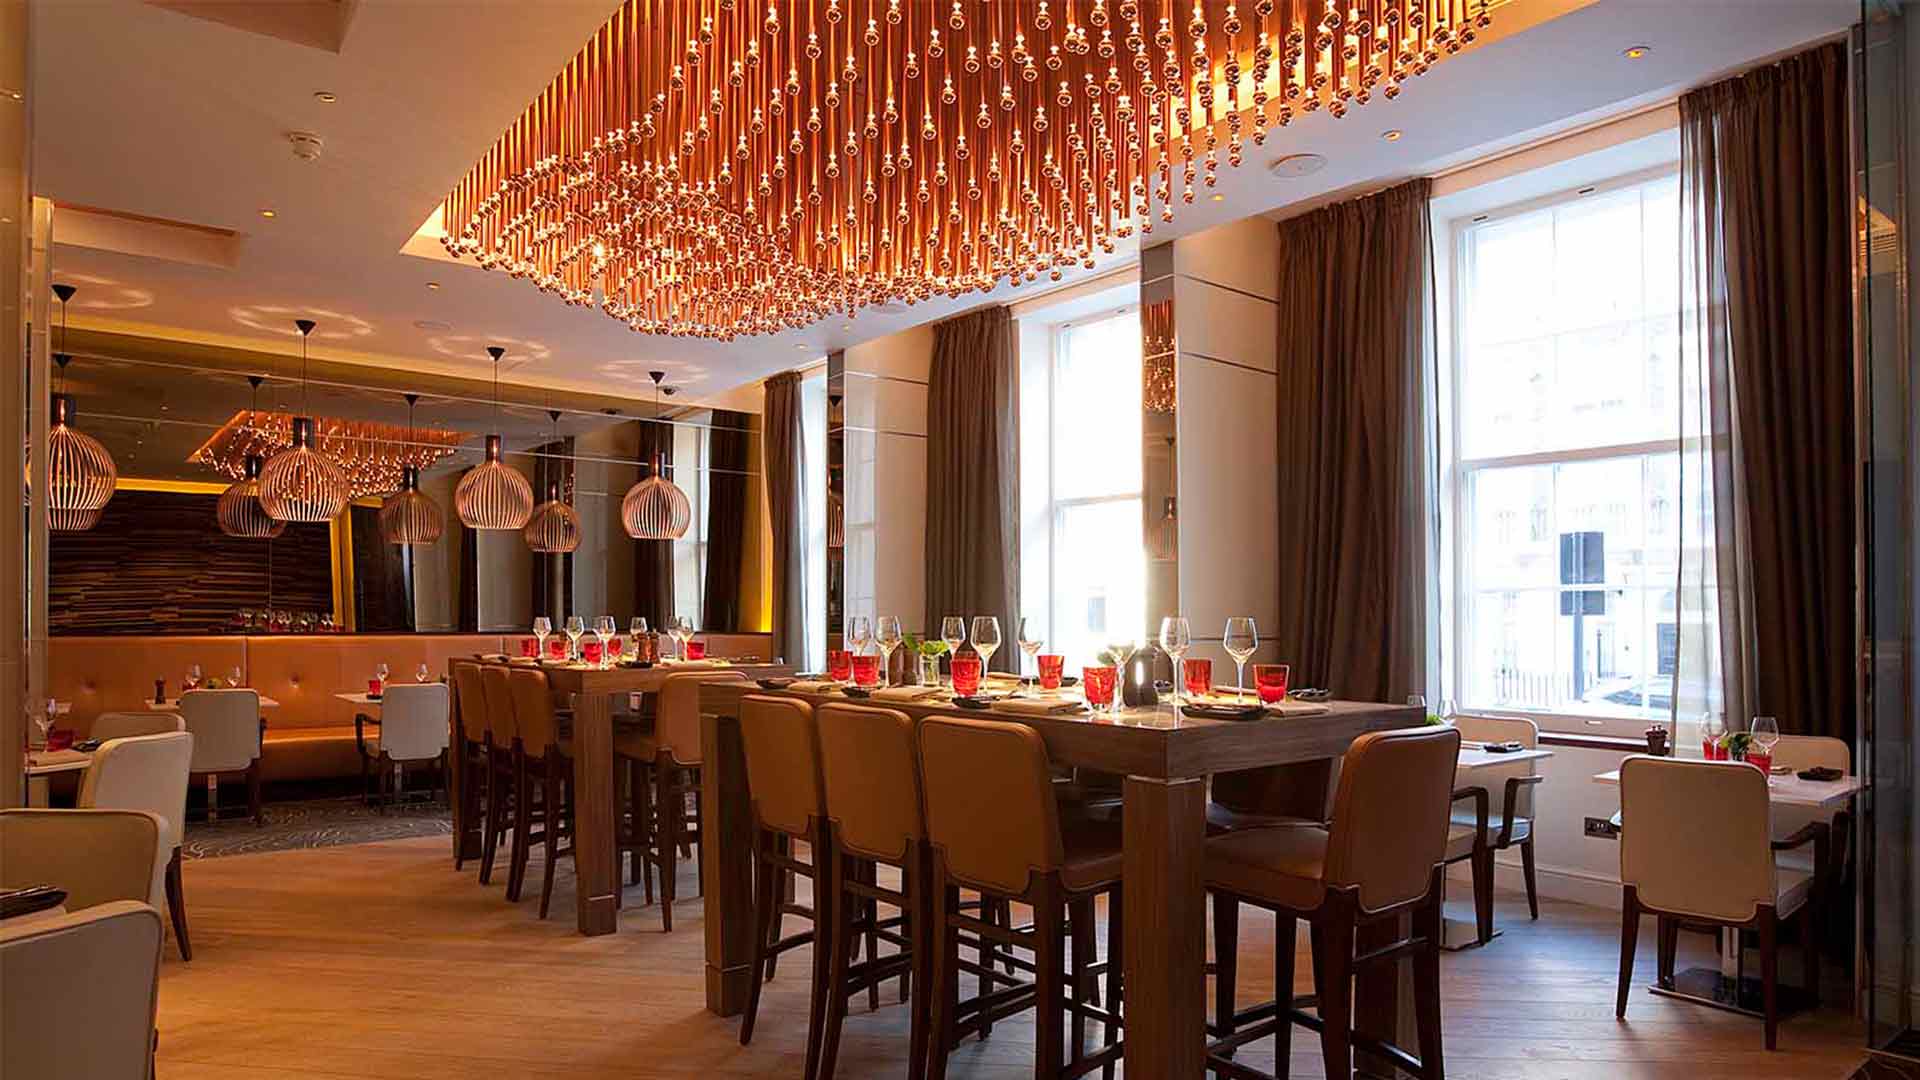 Centrepiece Lighting Chandelier Bespoke Copper Rods Restaurant Nulty